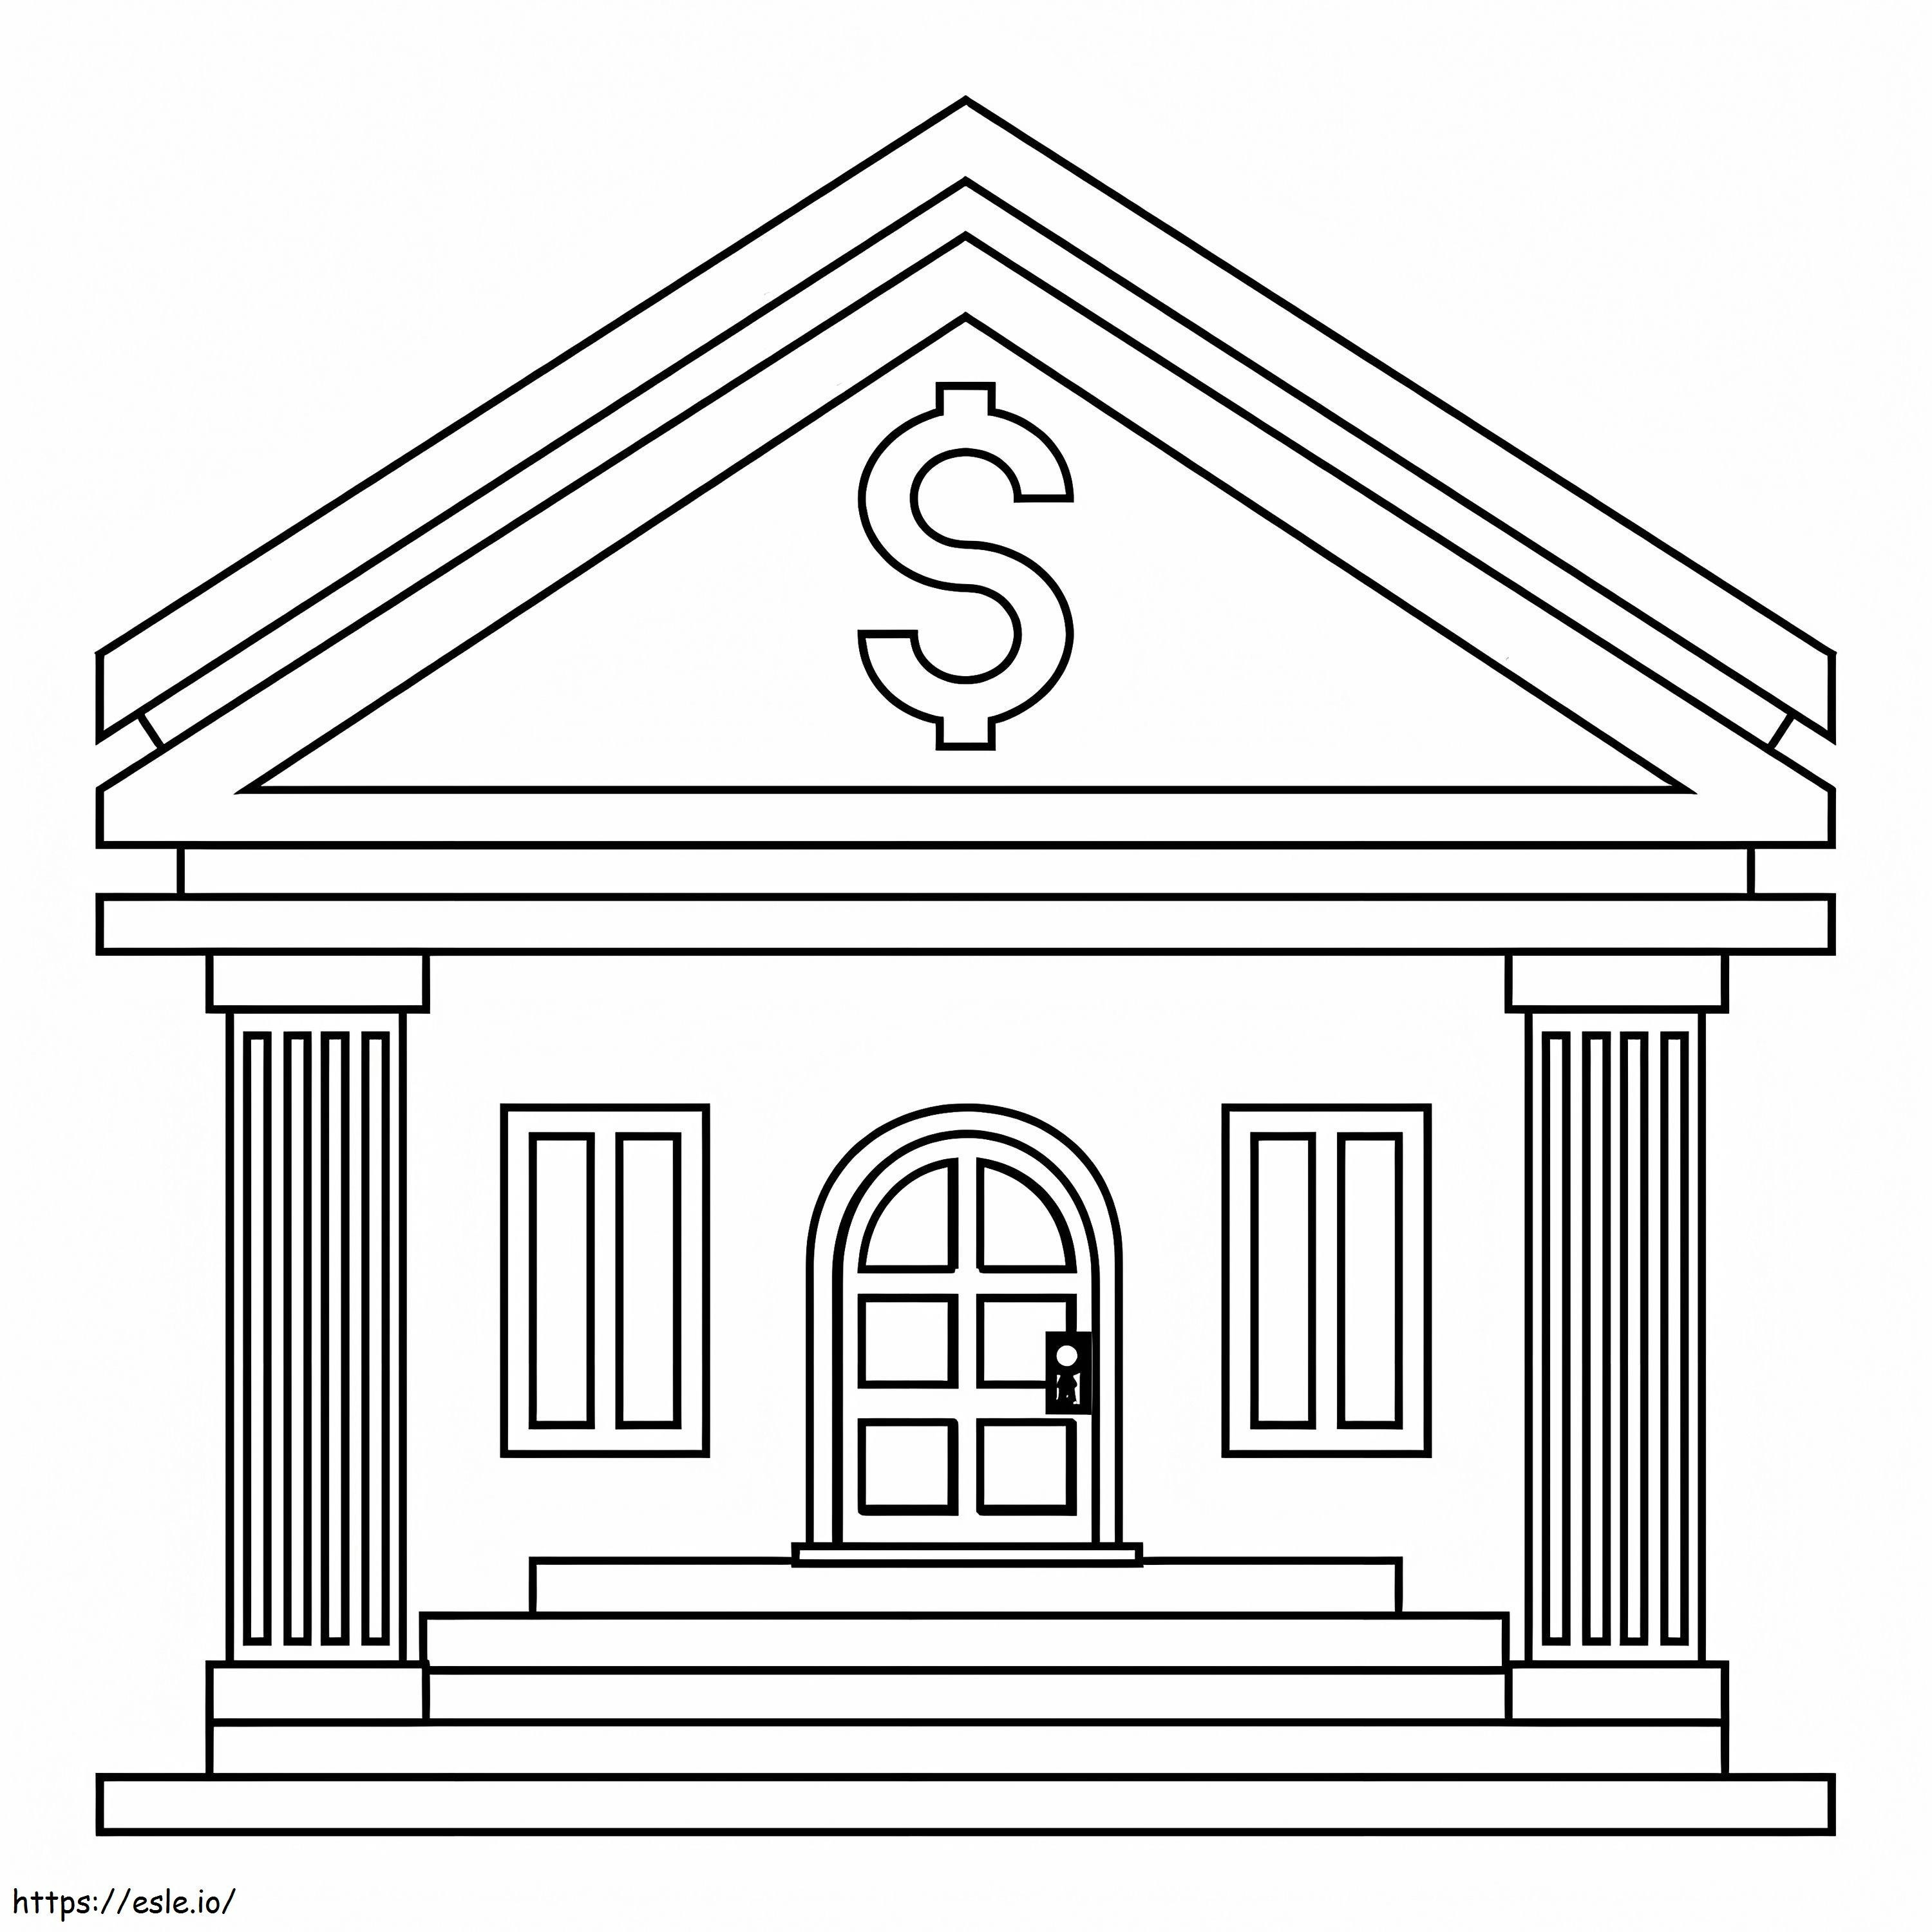 Printable Bank coloring page